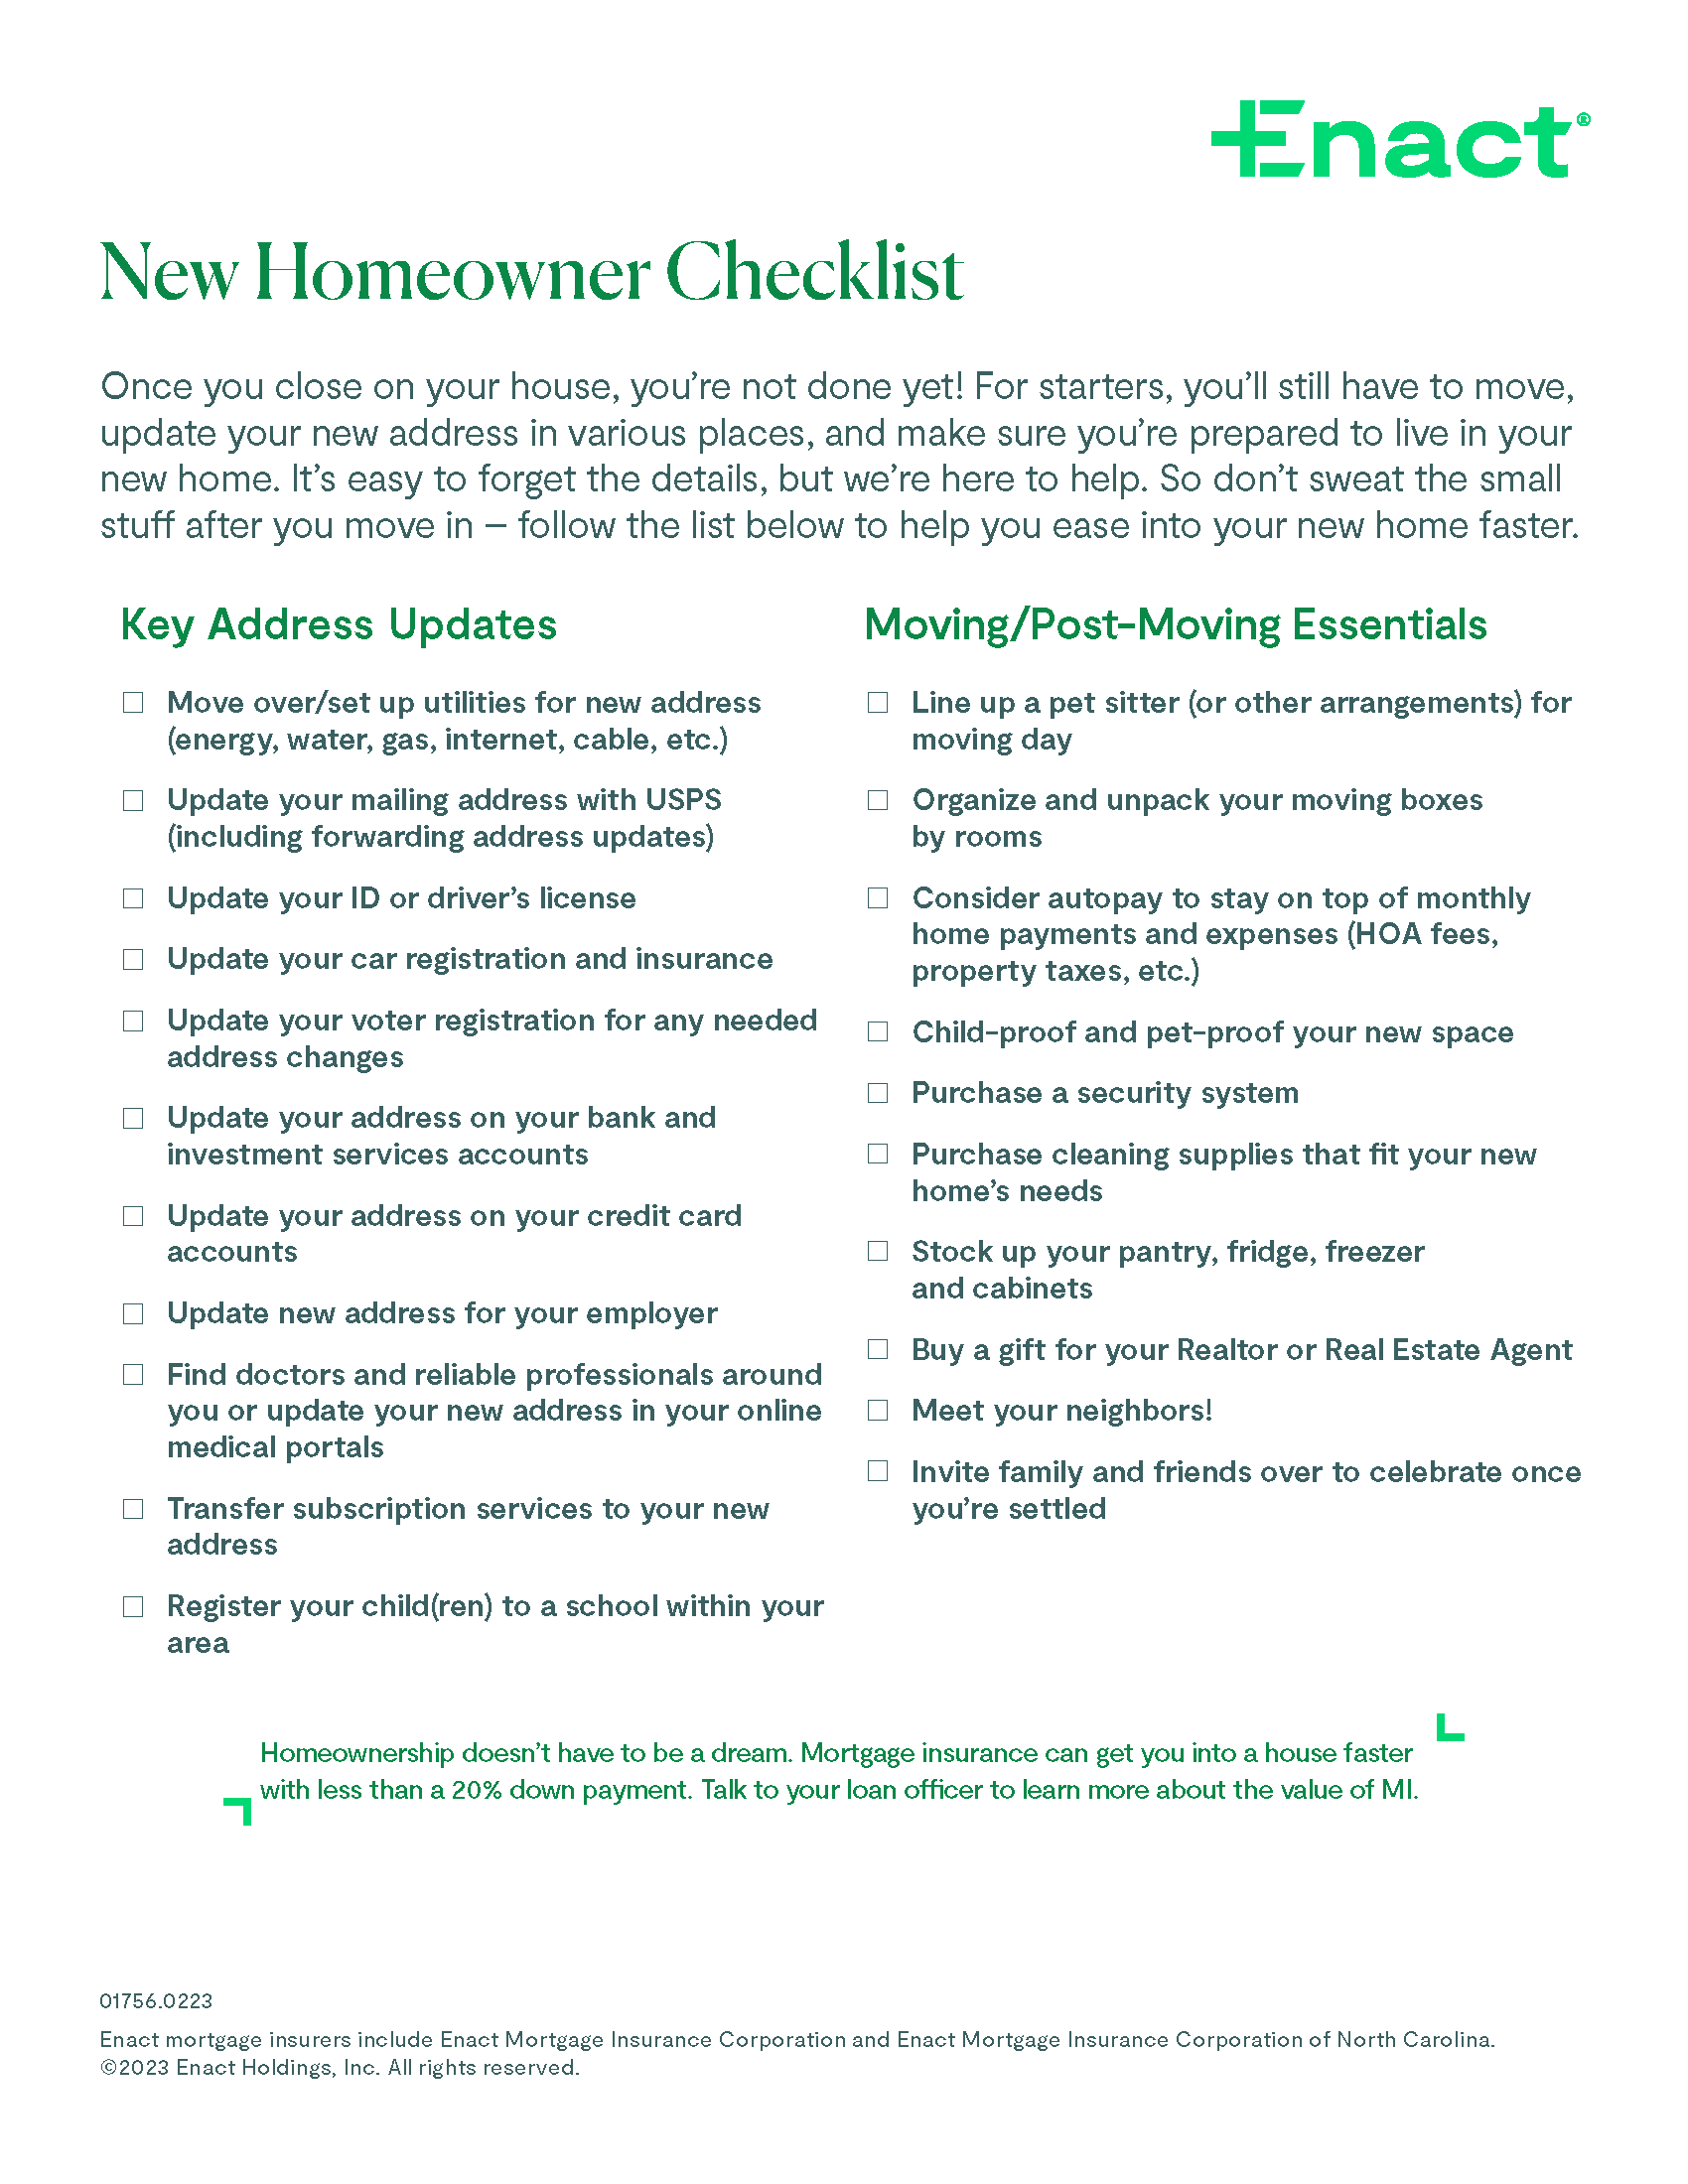 Enact's New Homeowner Checklist